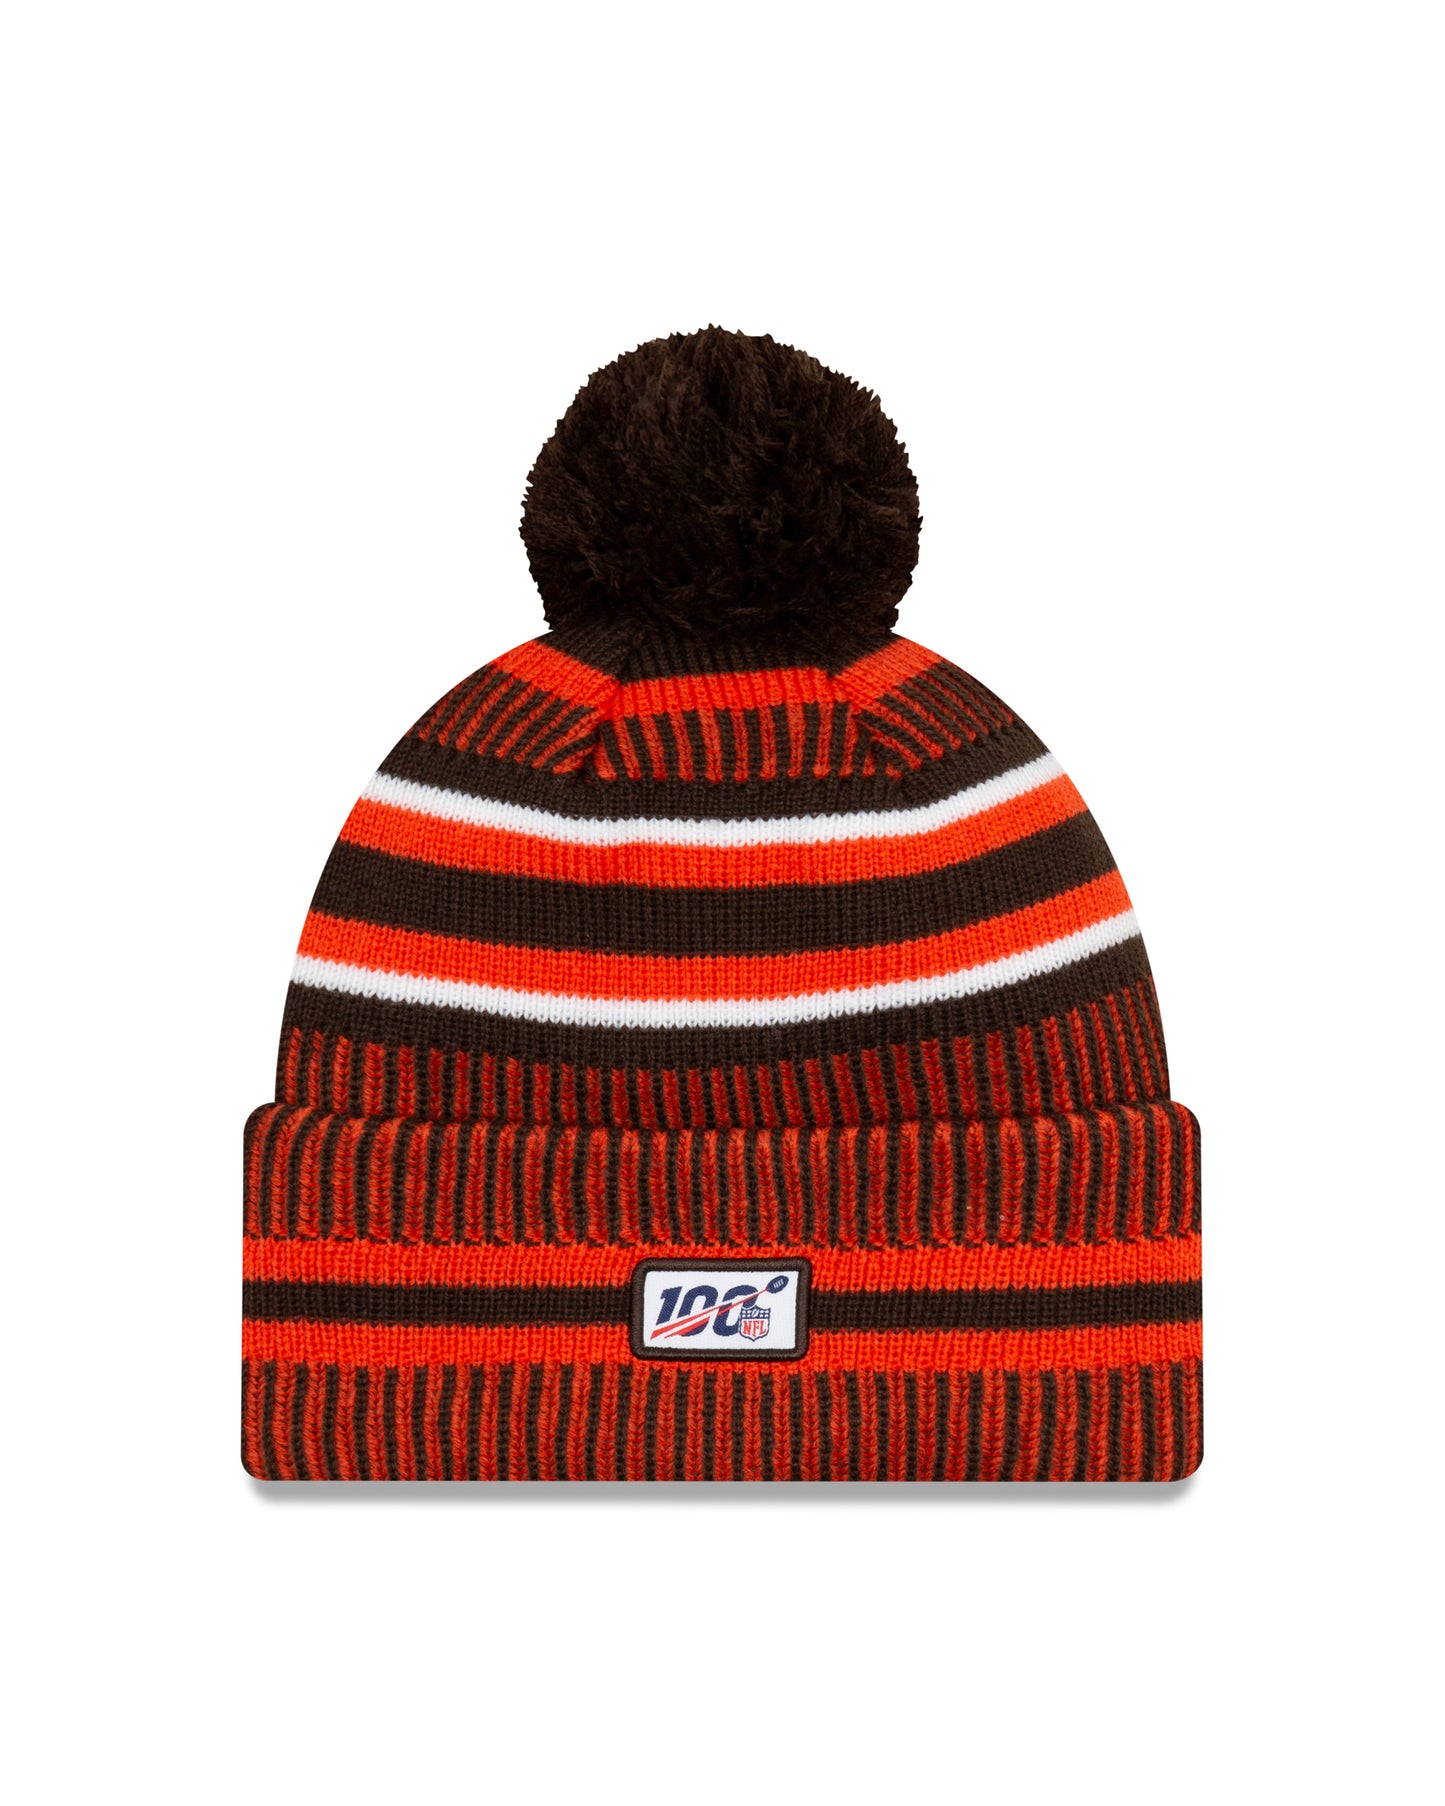 Cleveland Browns New Era Sideline Sport Cuffed Pom Knit Hat- Brown